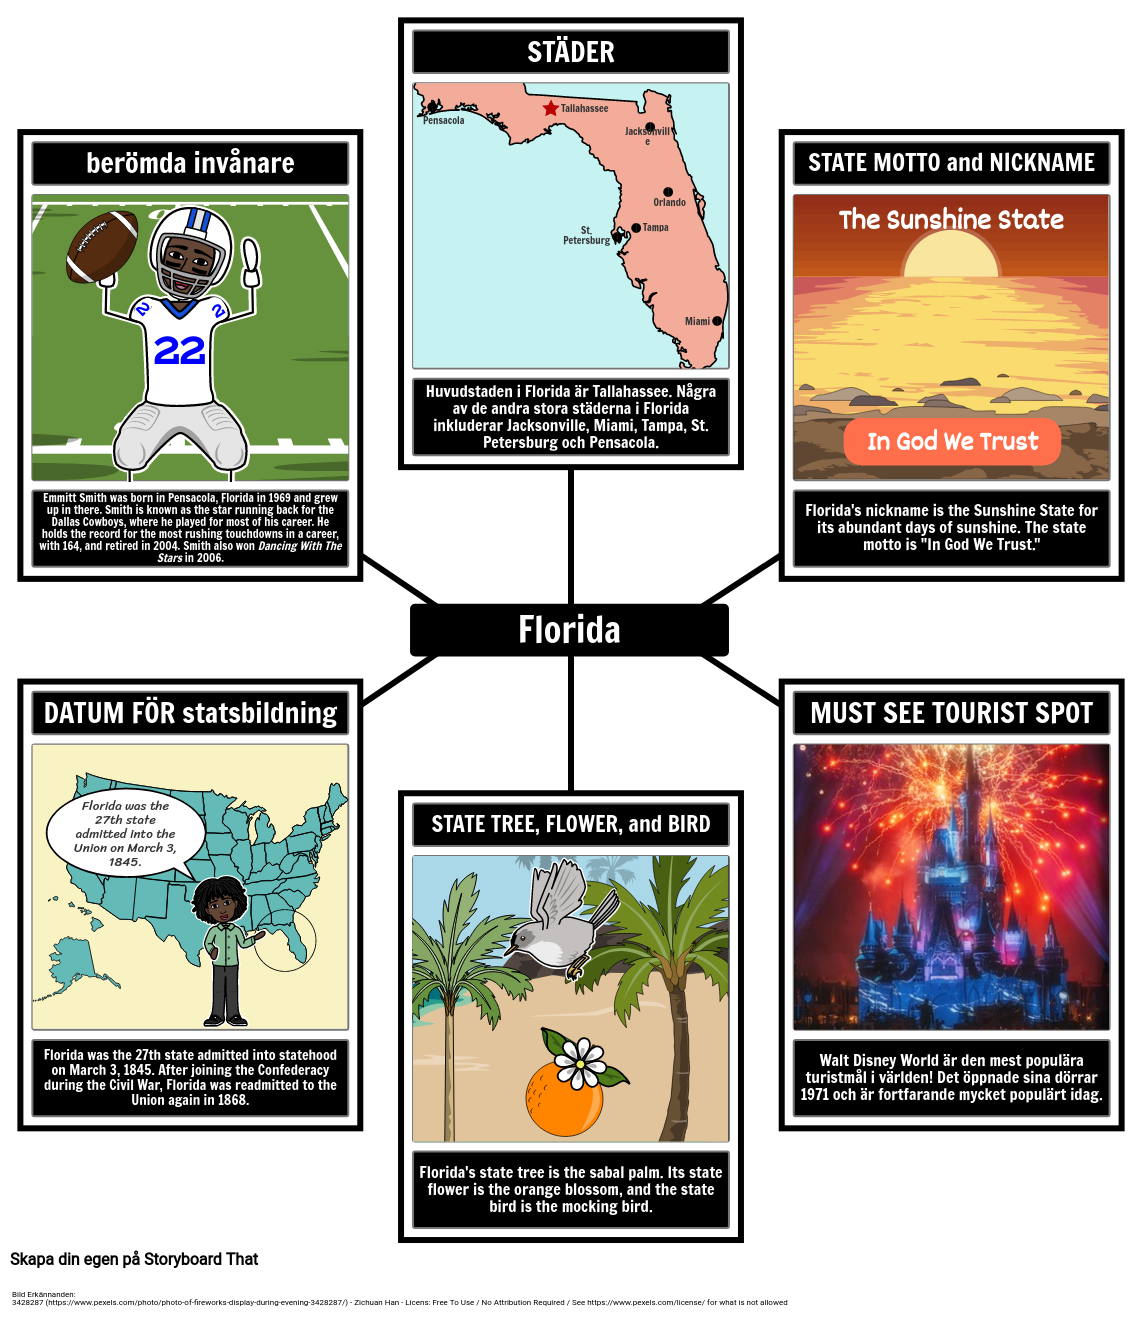 Fakta om Florida